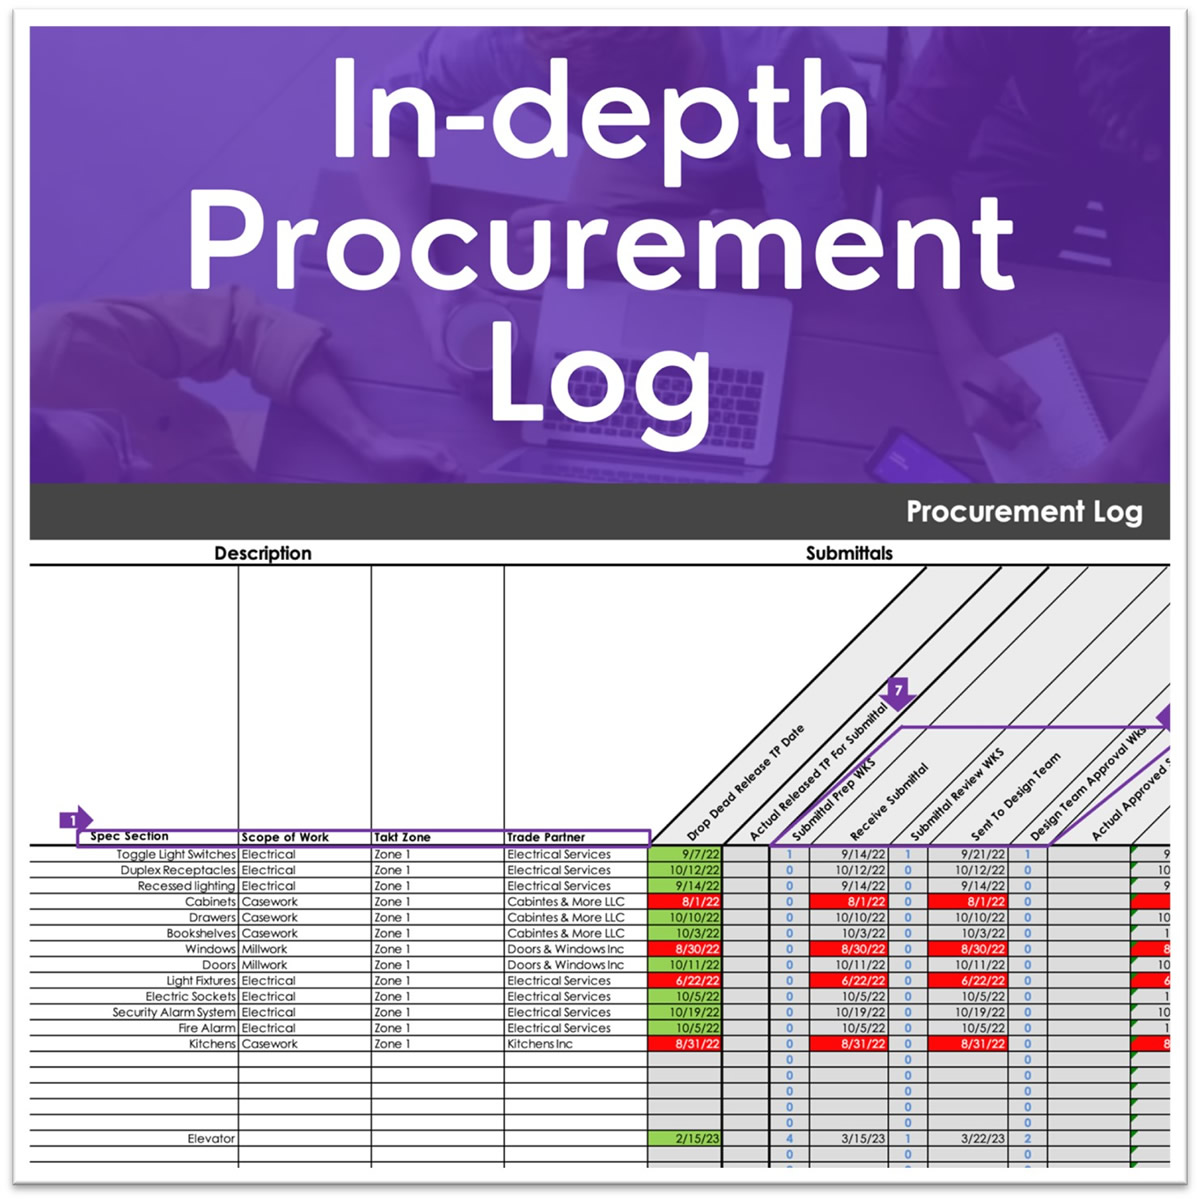 Image of procurement log.